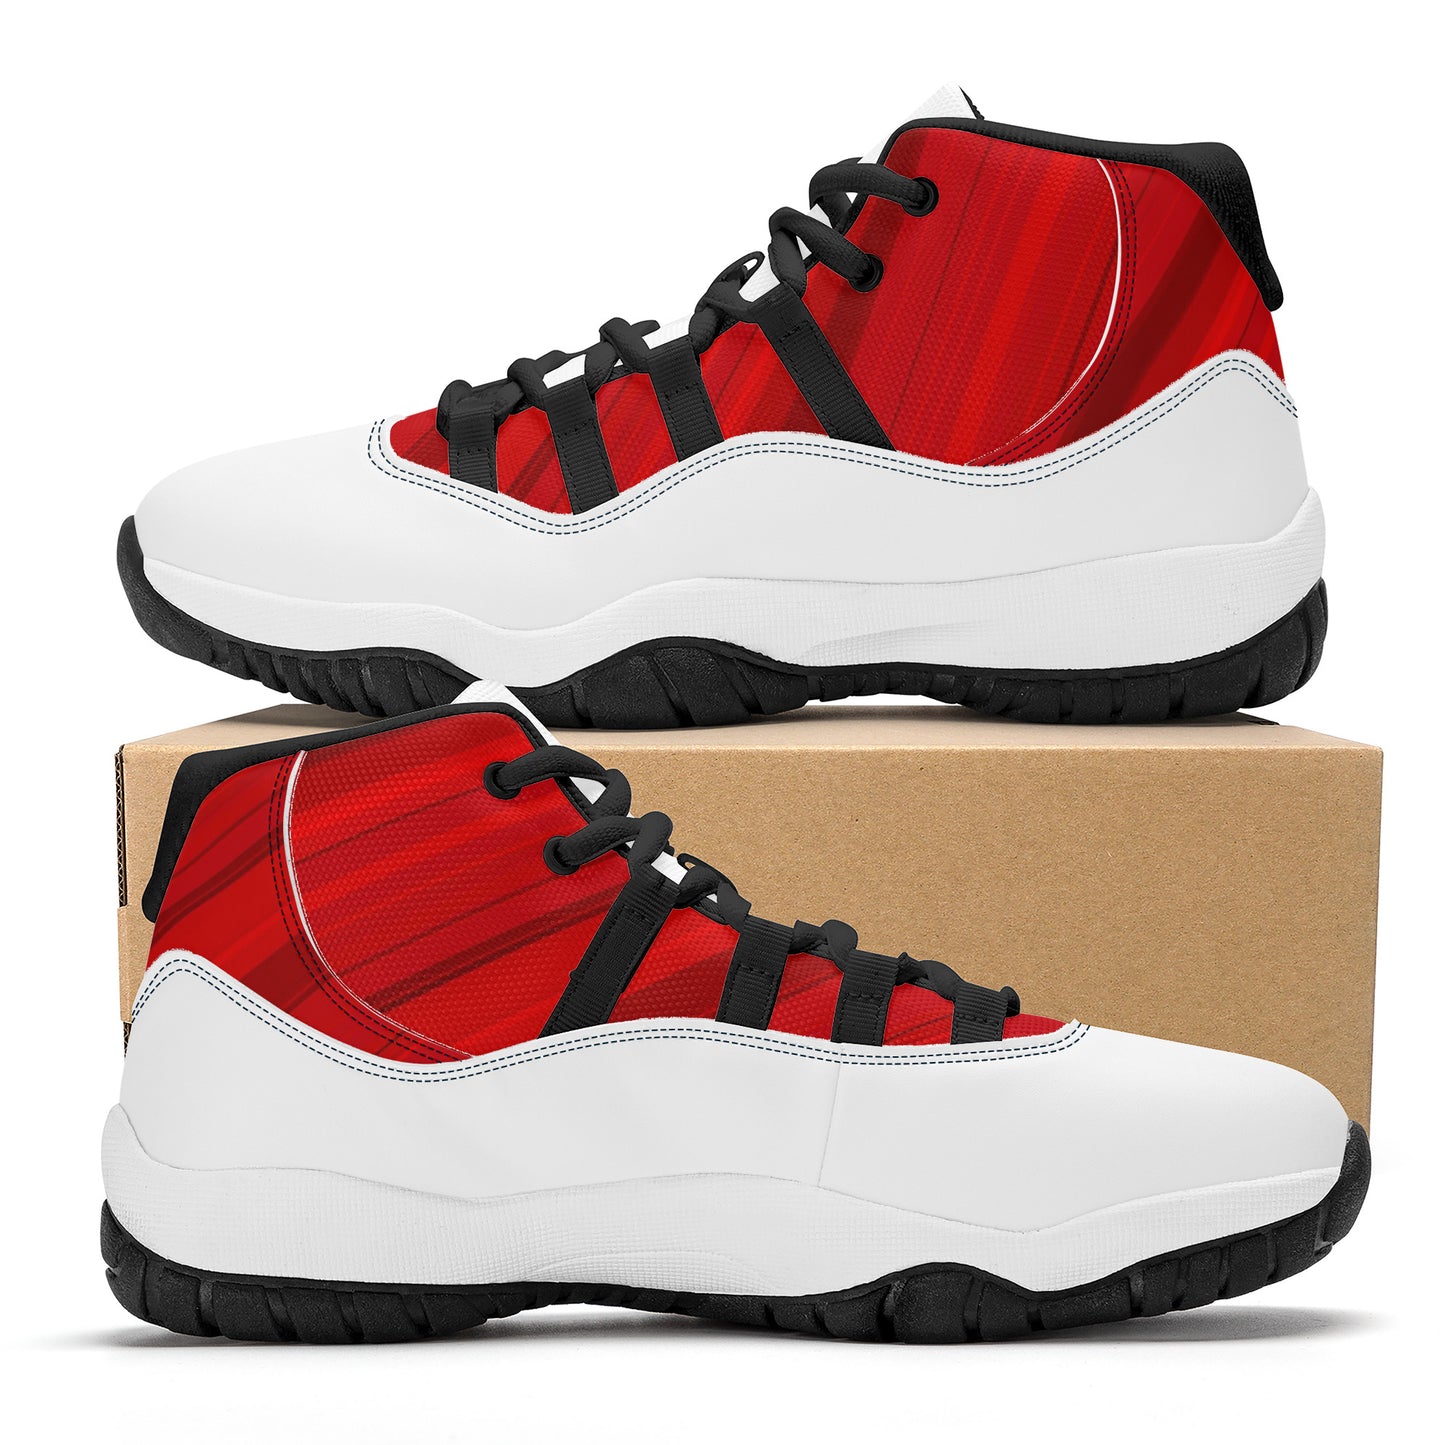 High Top Air Retro Sneakers - Red/Black